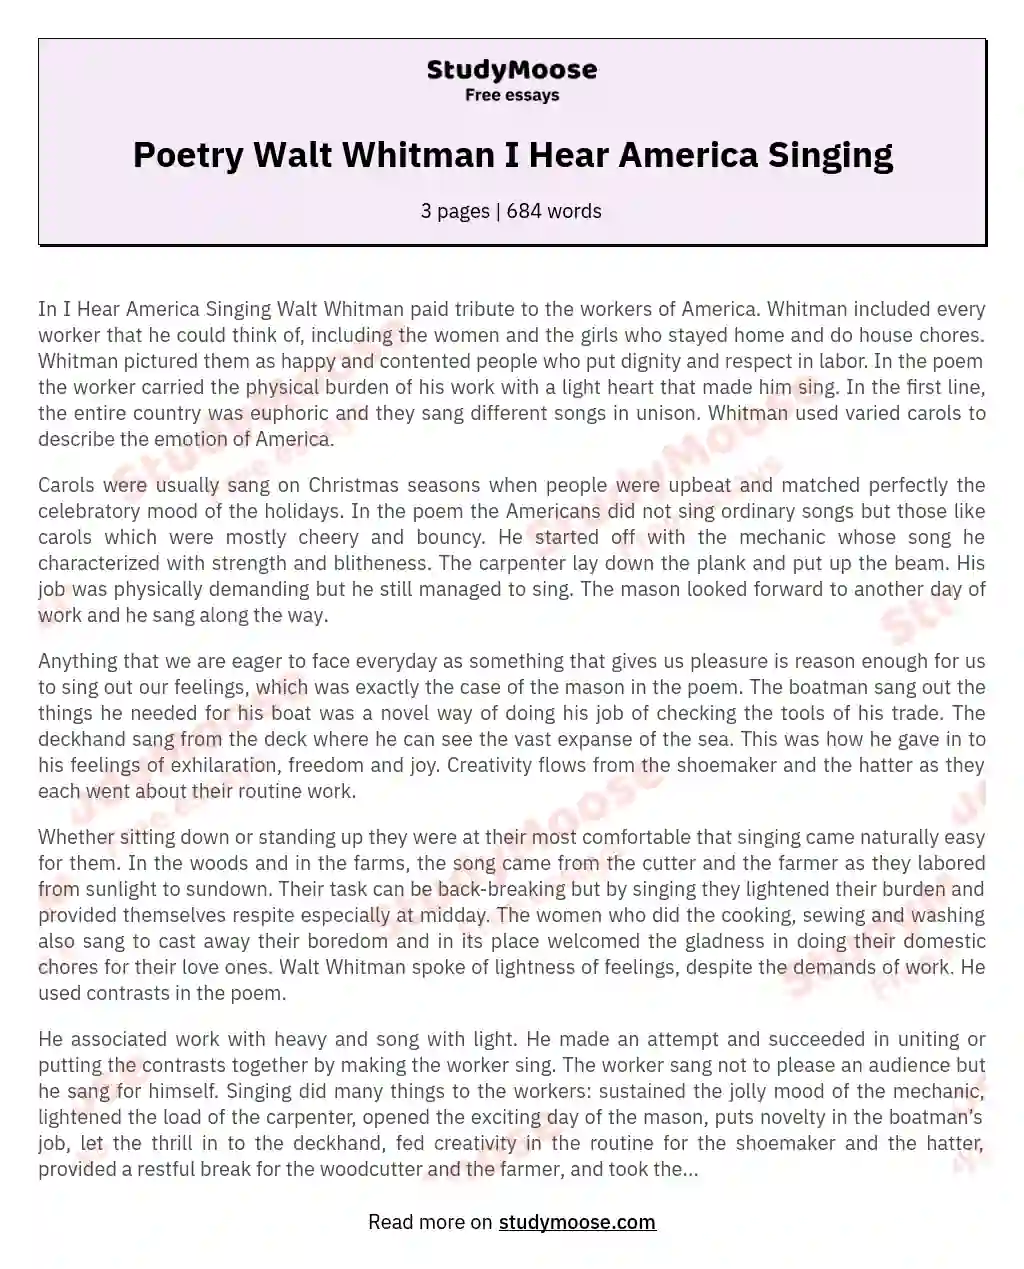 Poetry Walt Whitman I Hear America Singing